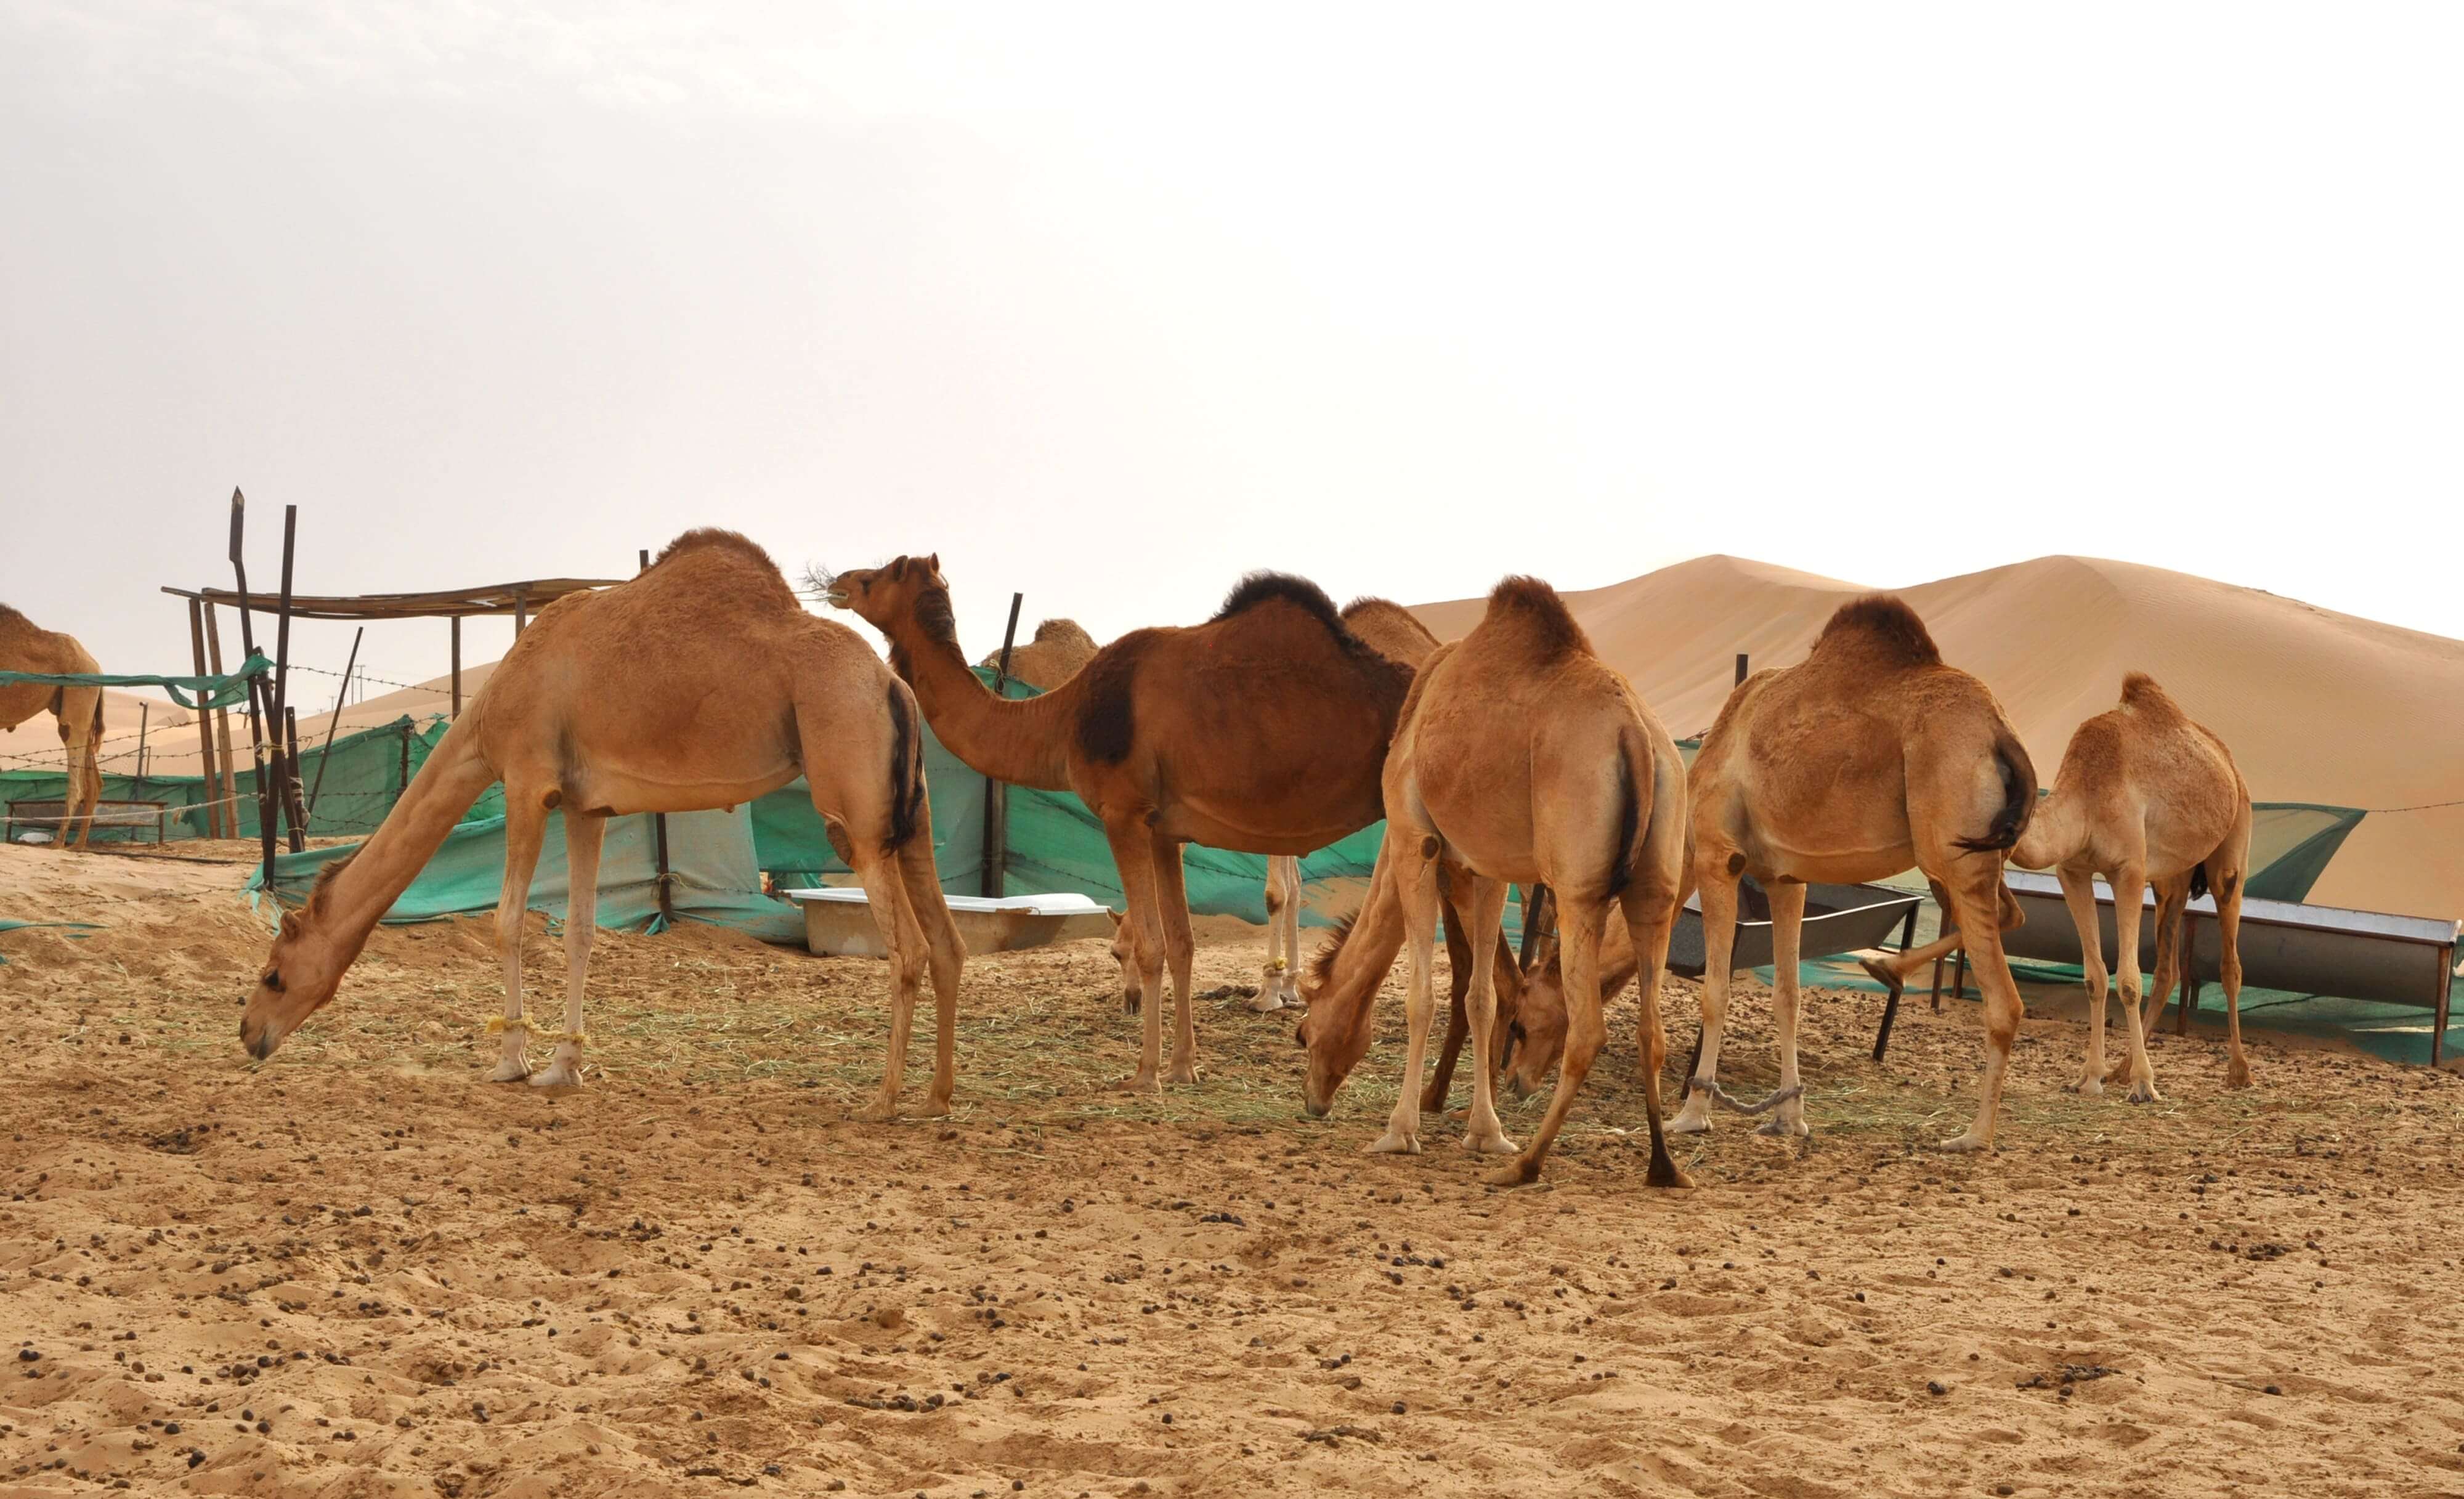 Liwa Safari Trip From Abu Dhabi - Private Tour In A Day